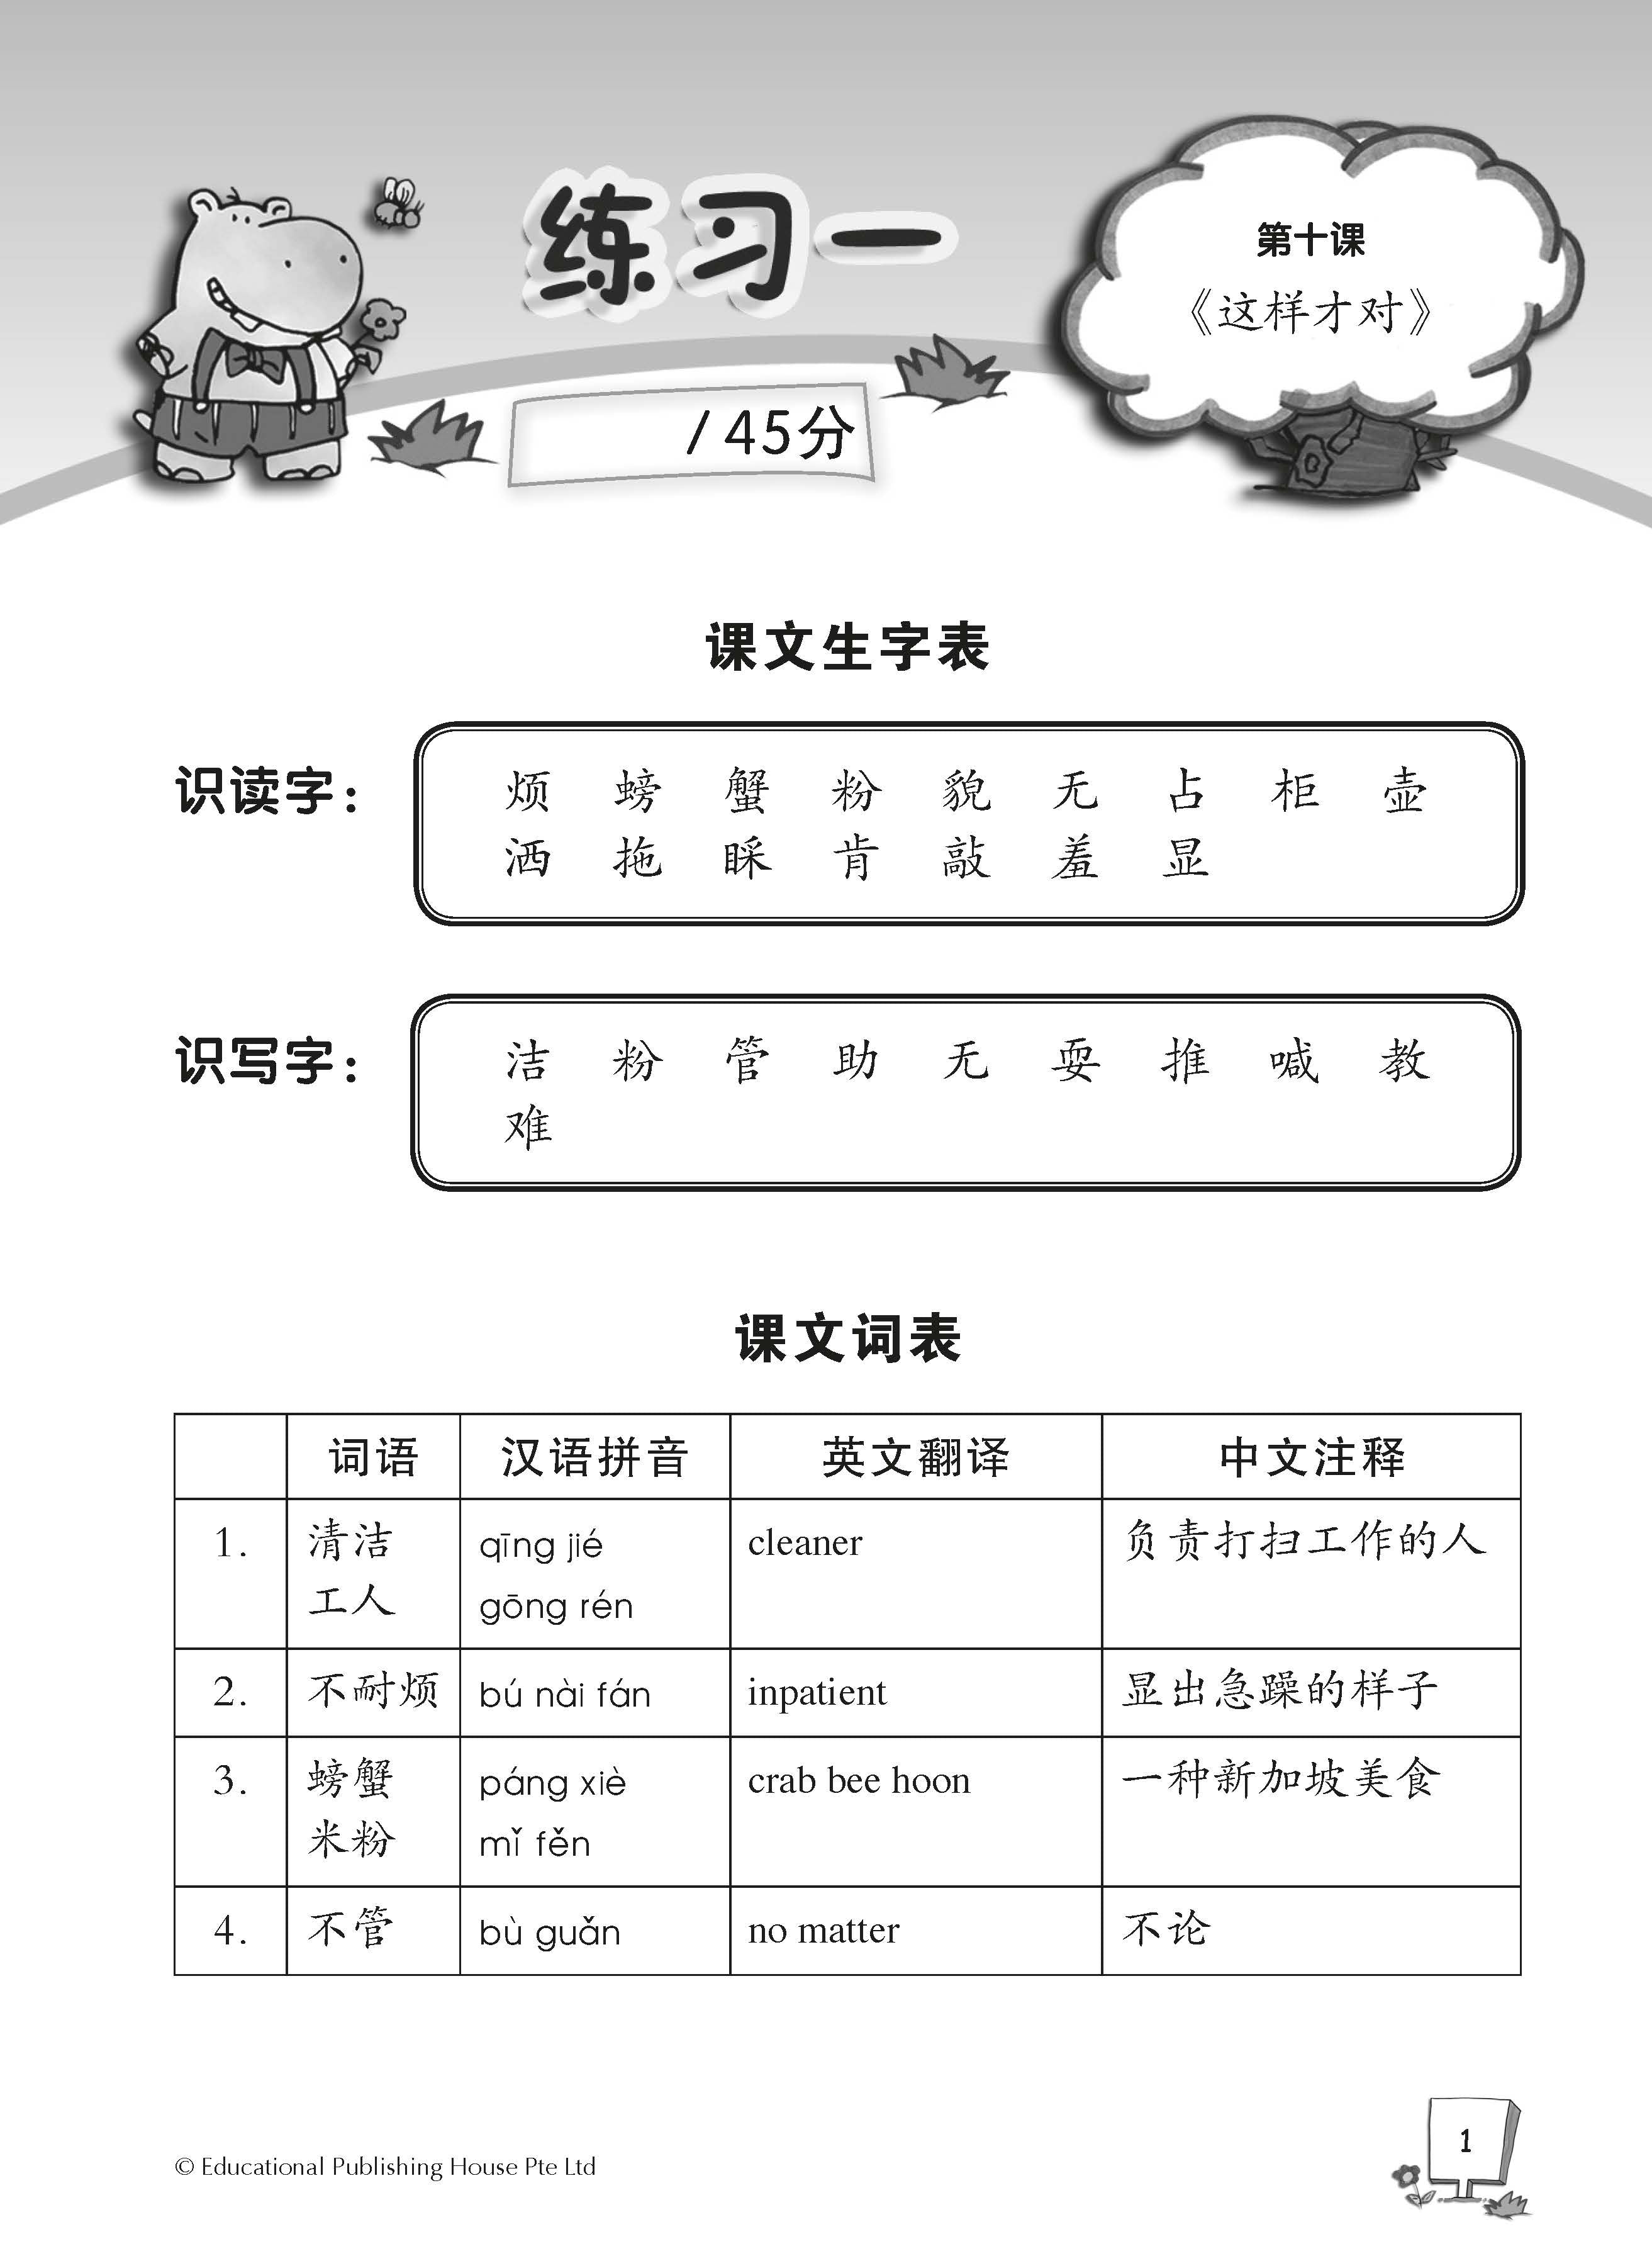 Primary 4B Chinese Weekly Revision 每周华文课文复习 - _MS, BASIC, CHINESE, EDUCATIONAL PUBLISHING HOUSE, PRIMARY 4